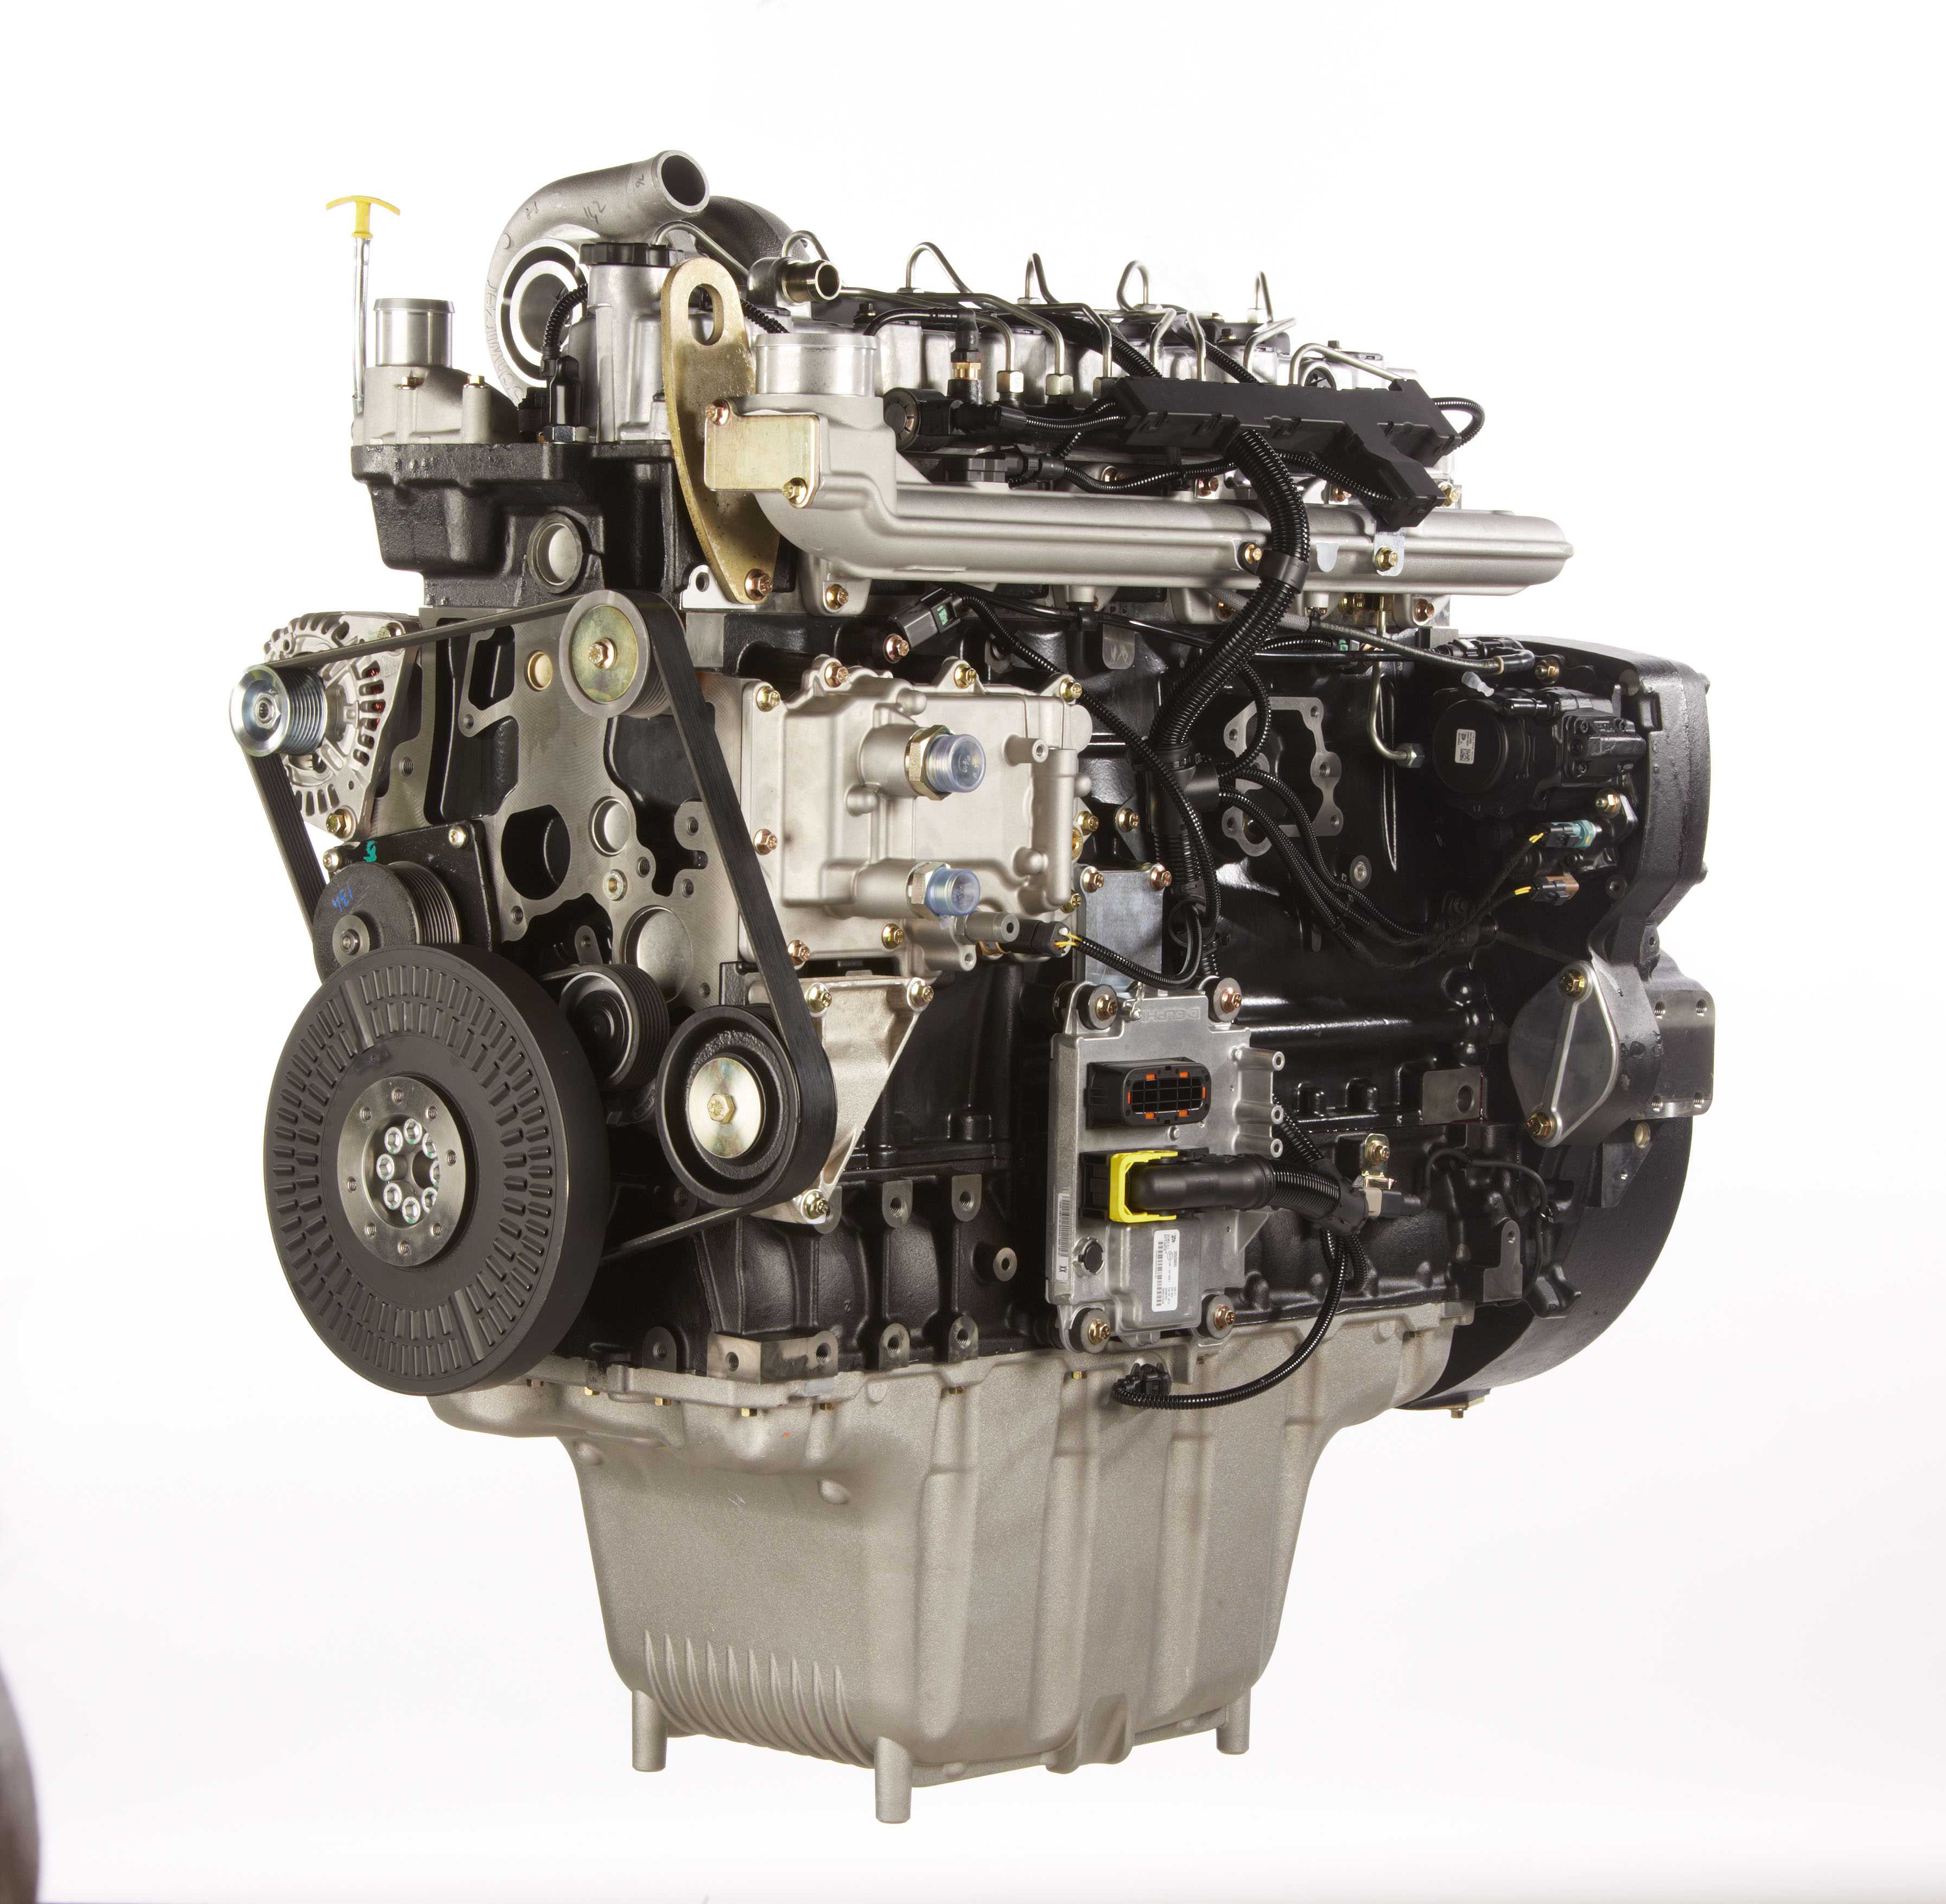 The new JCB Dieselmax 672 engine